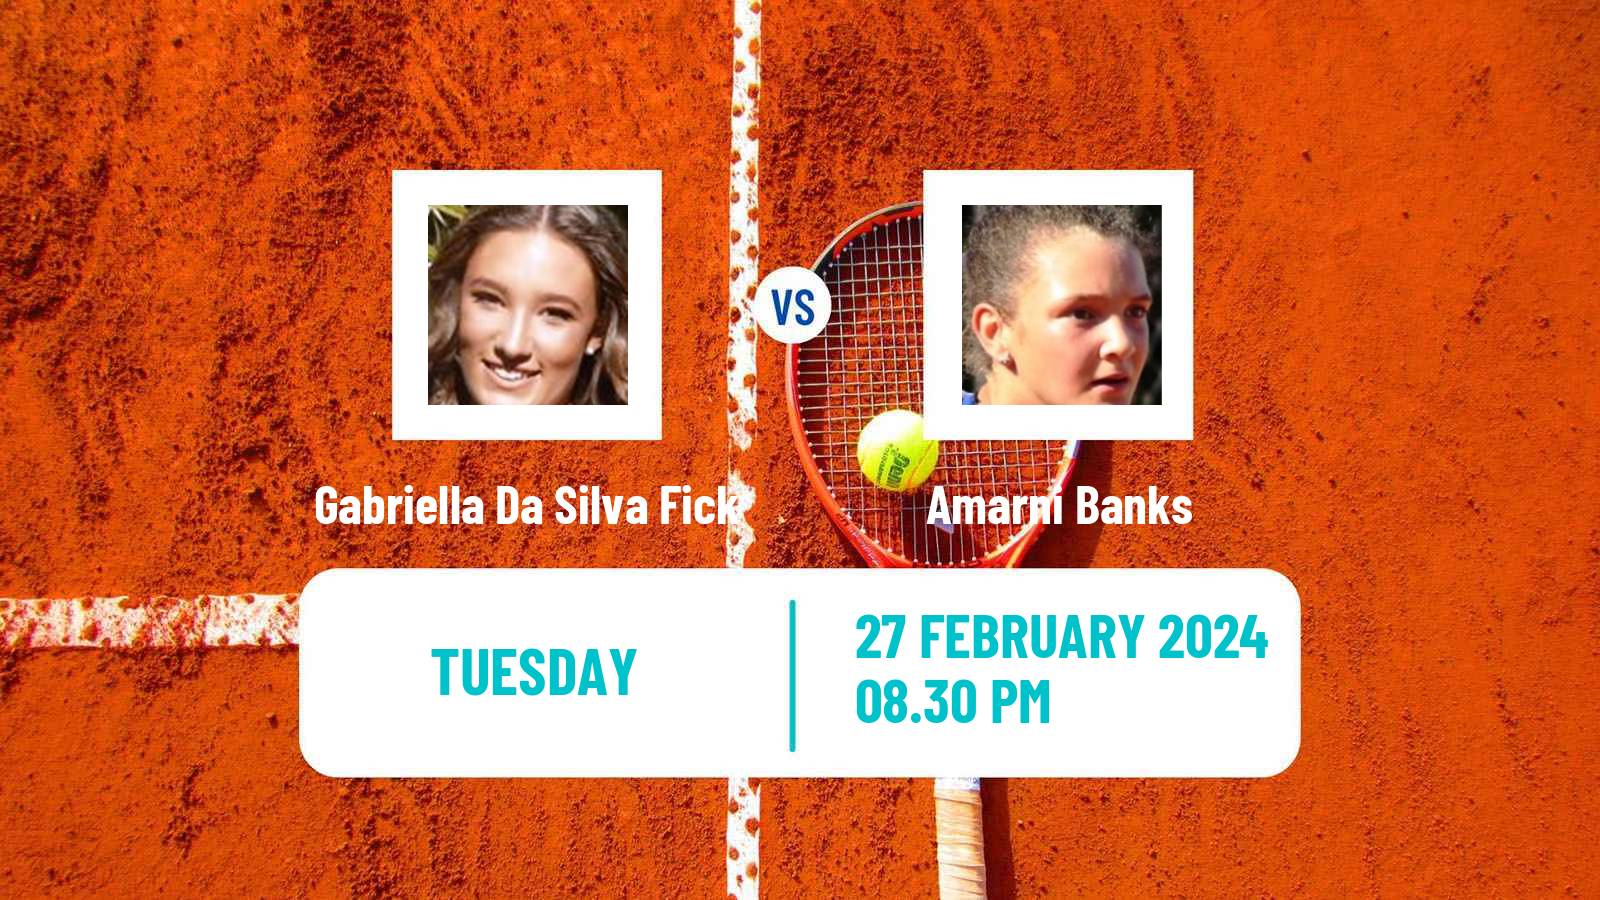 Tennis ITF W35 Traralgon 2 Women Gabriella Da Silva Fick - Amarni Banks